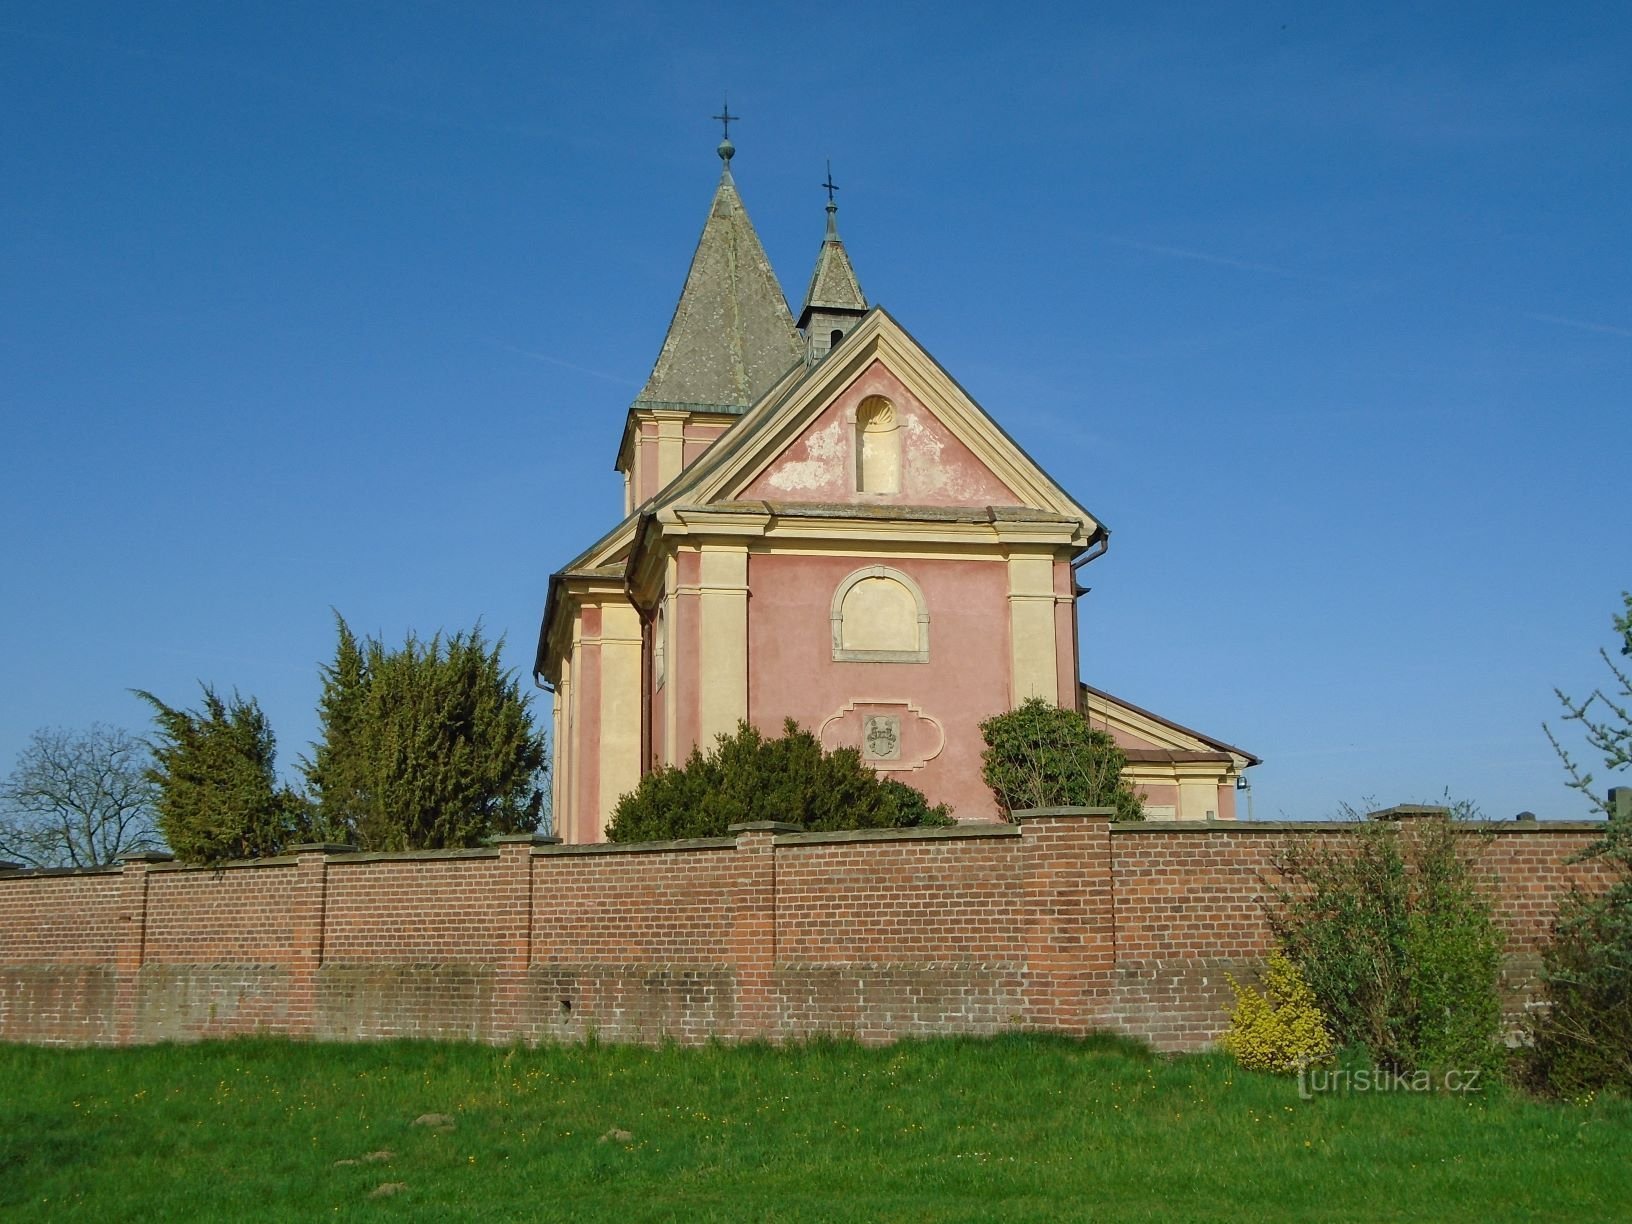 Cerkev sv. Jiří (Hrádek, 21.4.2018. april XNUMX)